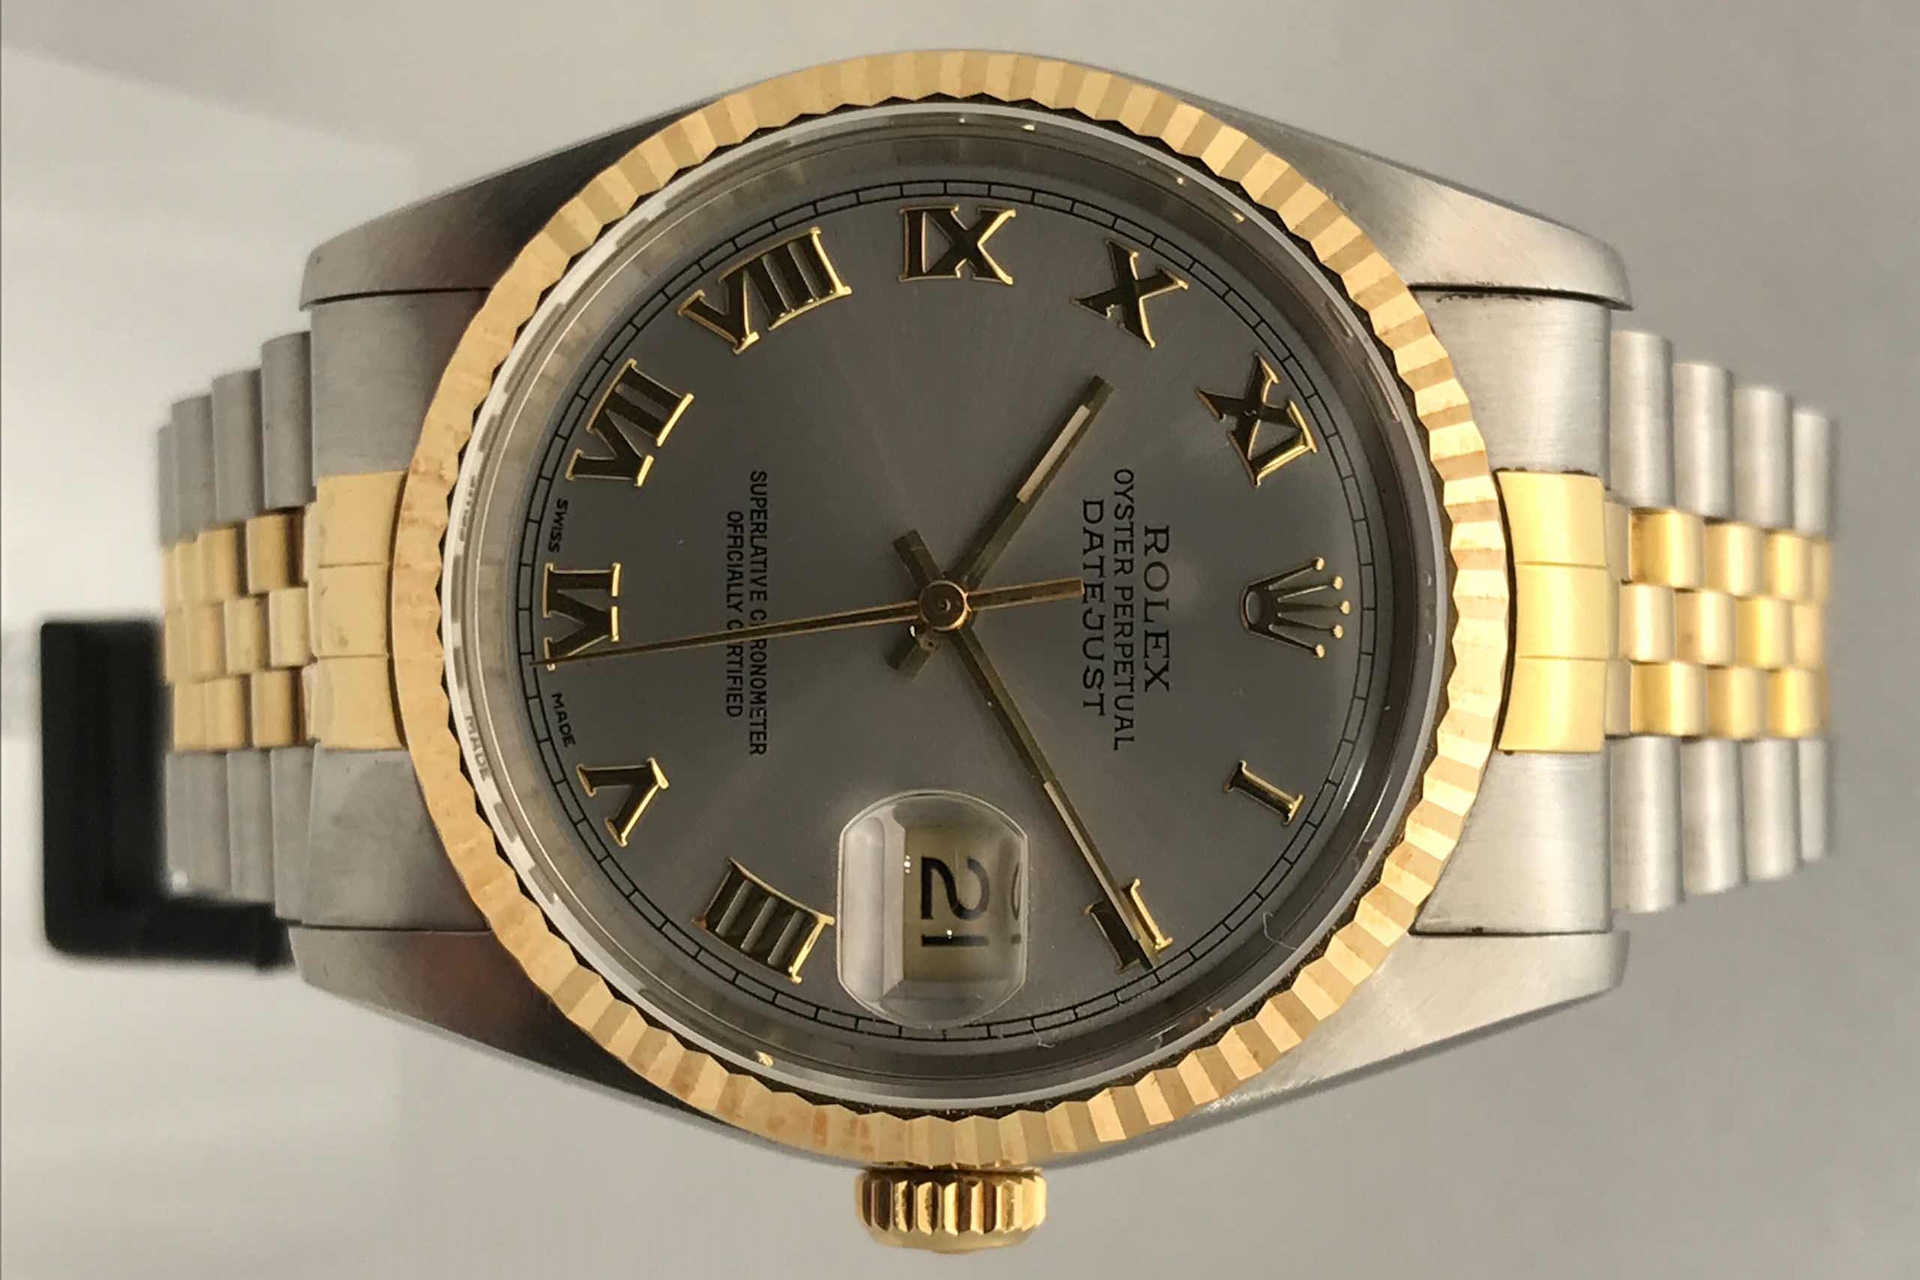  Orologi di lusso in vendita